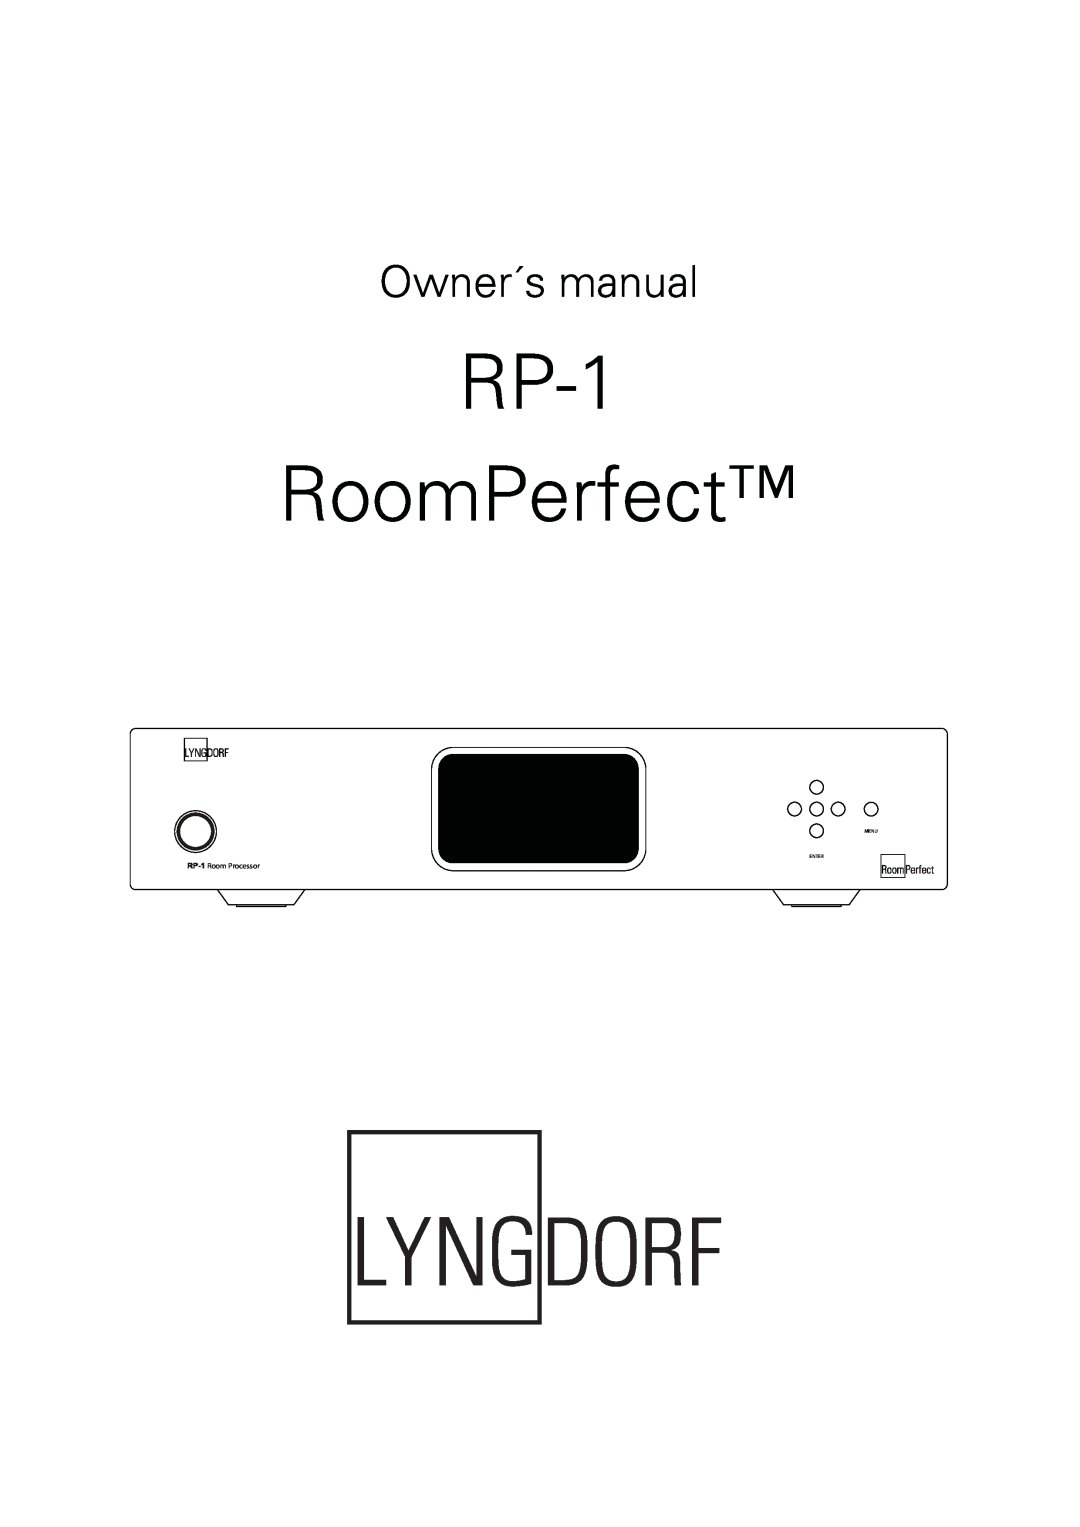 Lyngdorf Audio owner manual RP-1 RoomPerfect, Owner´s manual, RP-1 Room Processor, Menu Enter 